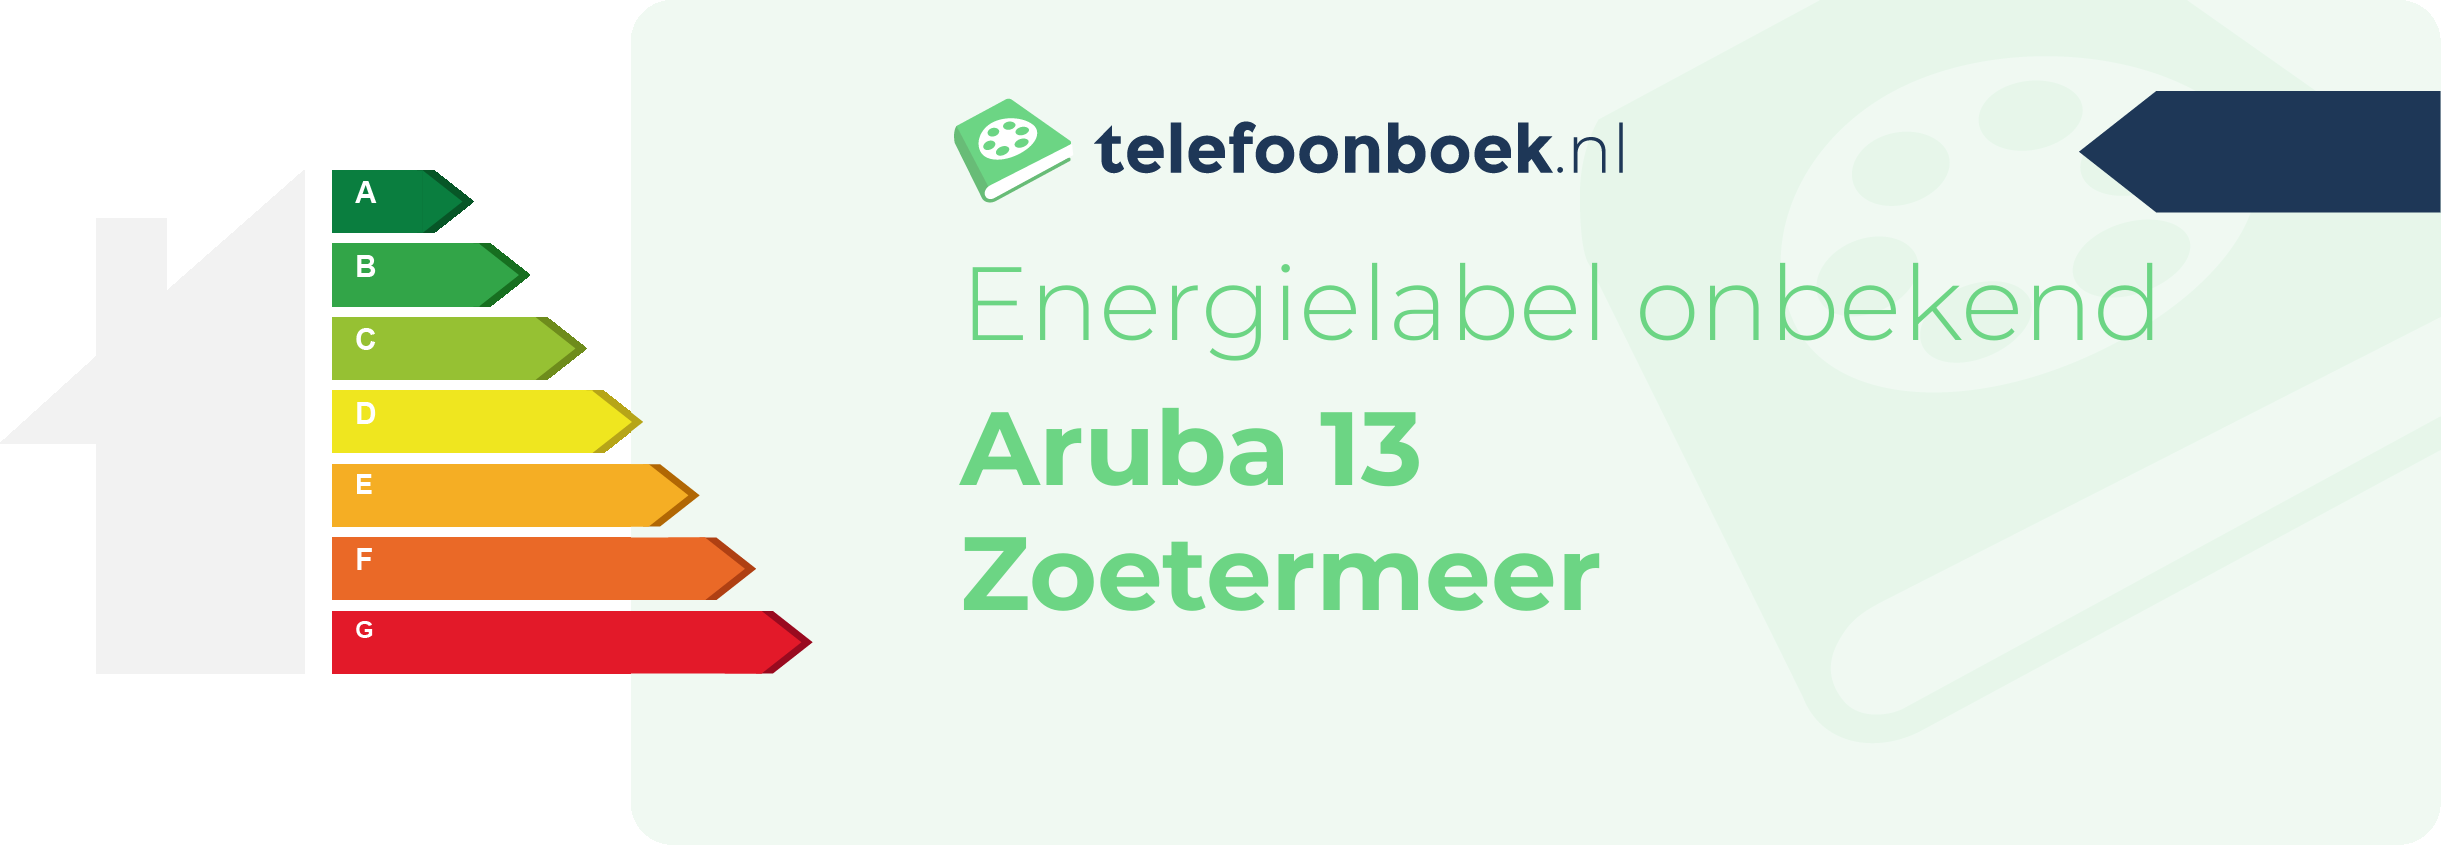 Energielabel Aruba 13 Zoetermeer